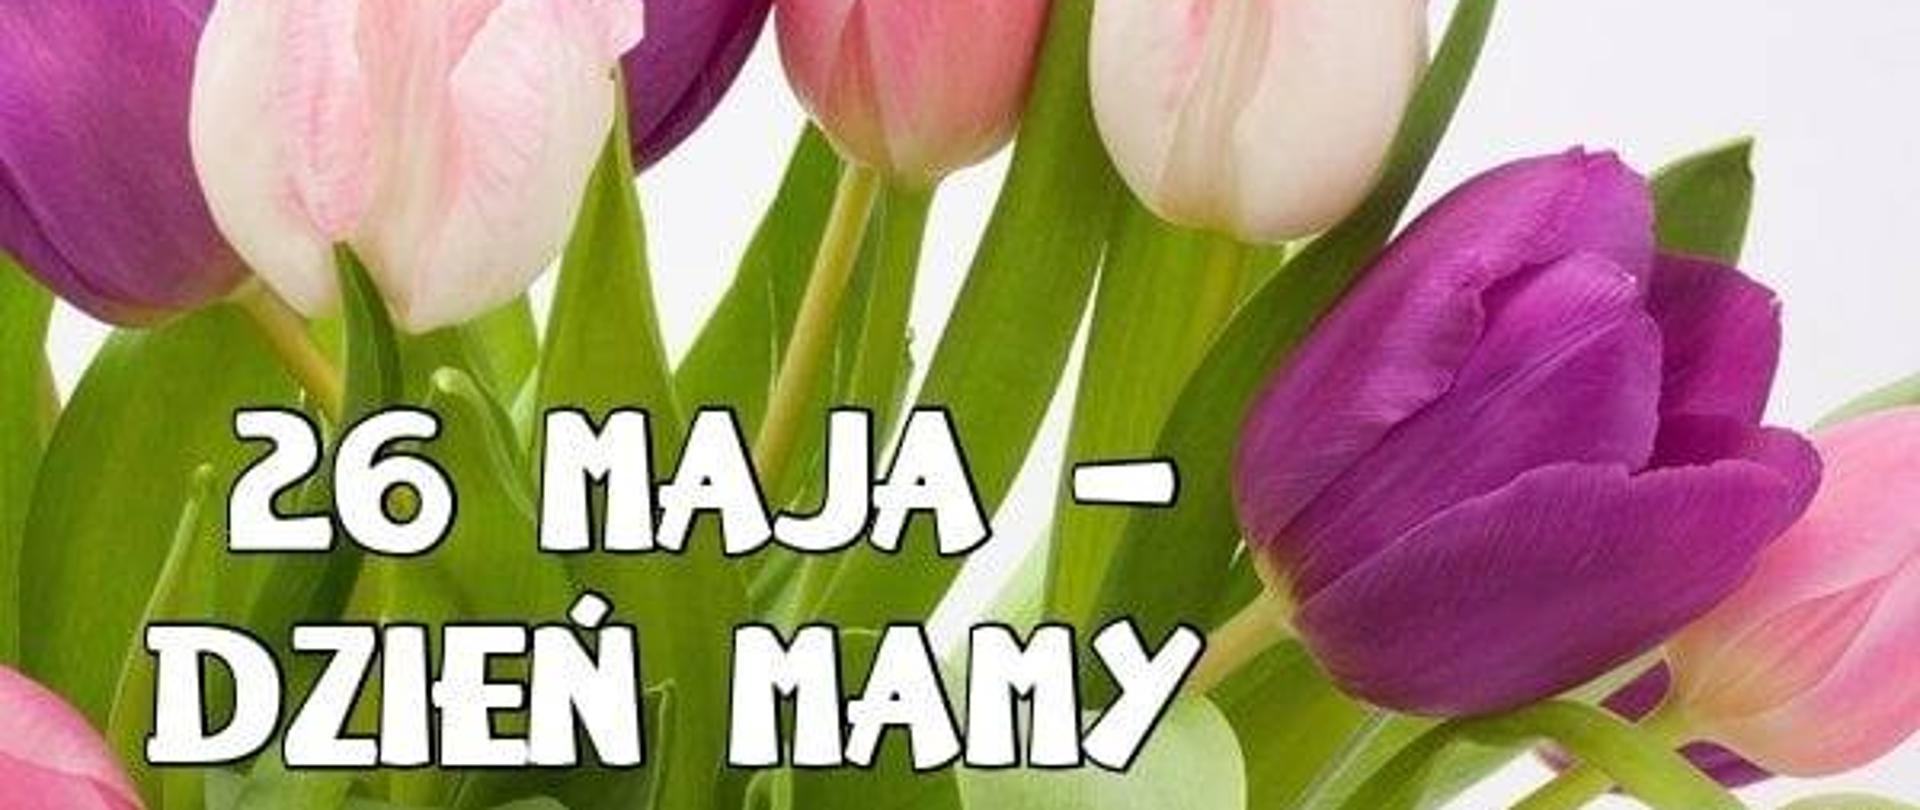 26 maja Dzień Mamy - tulipany